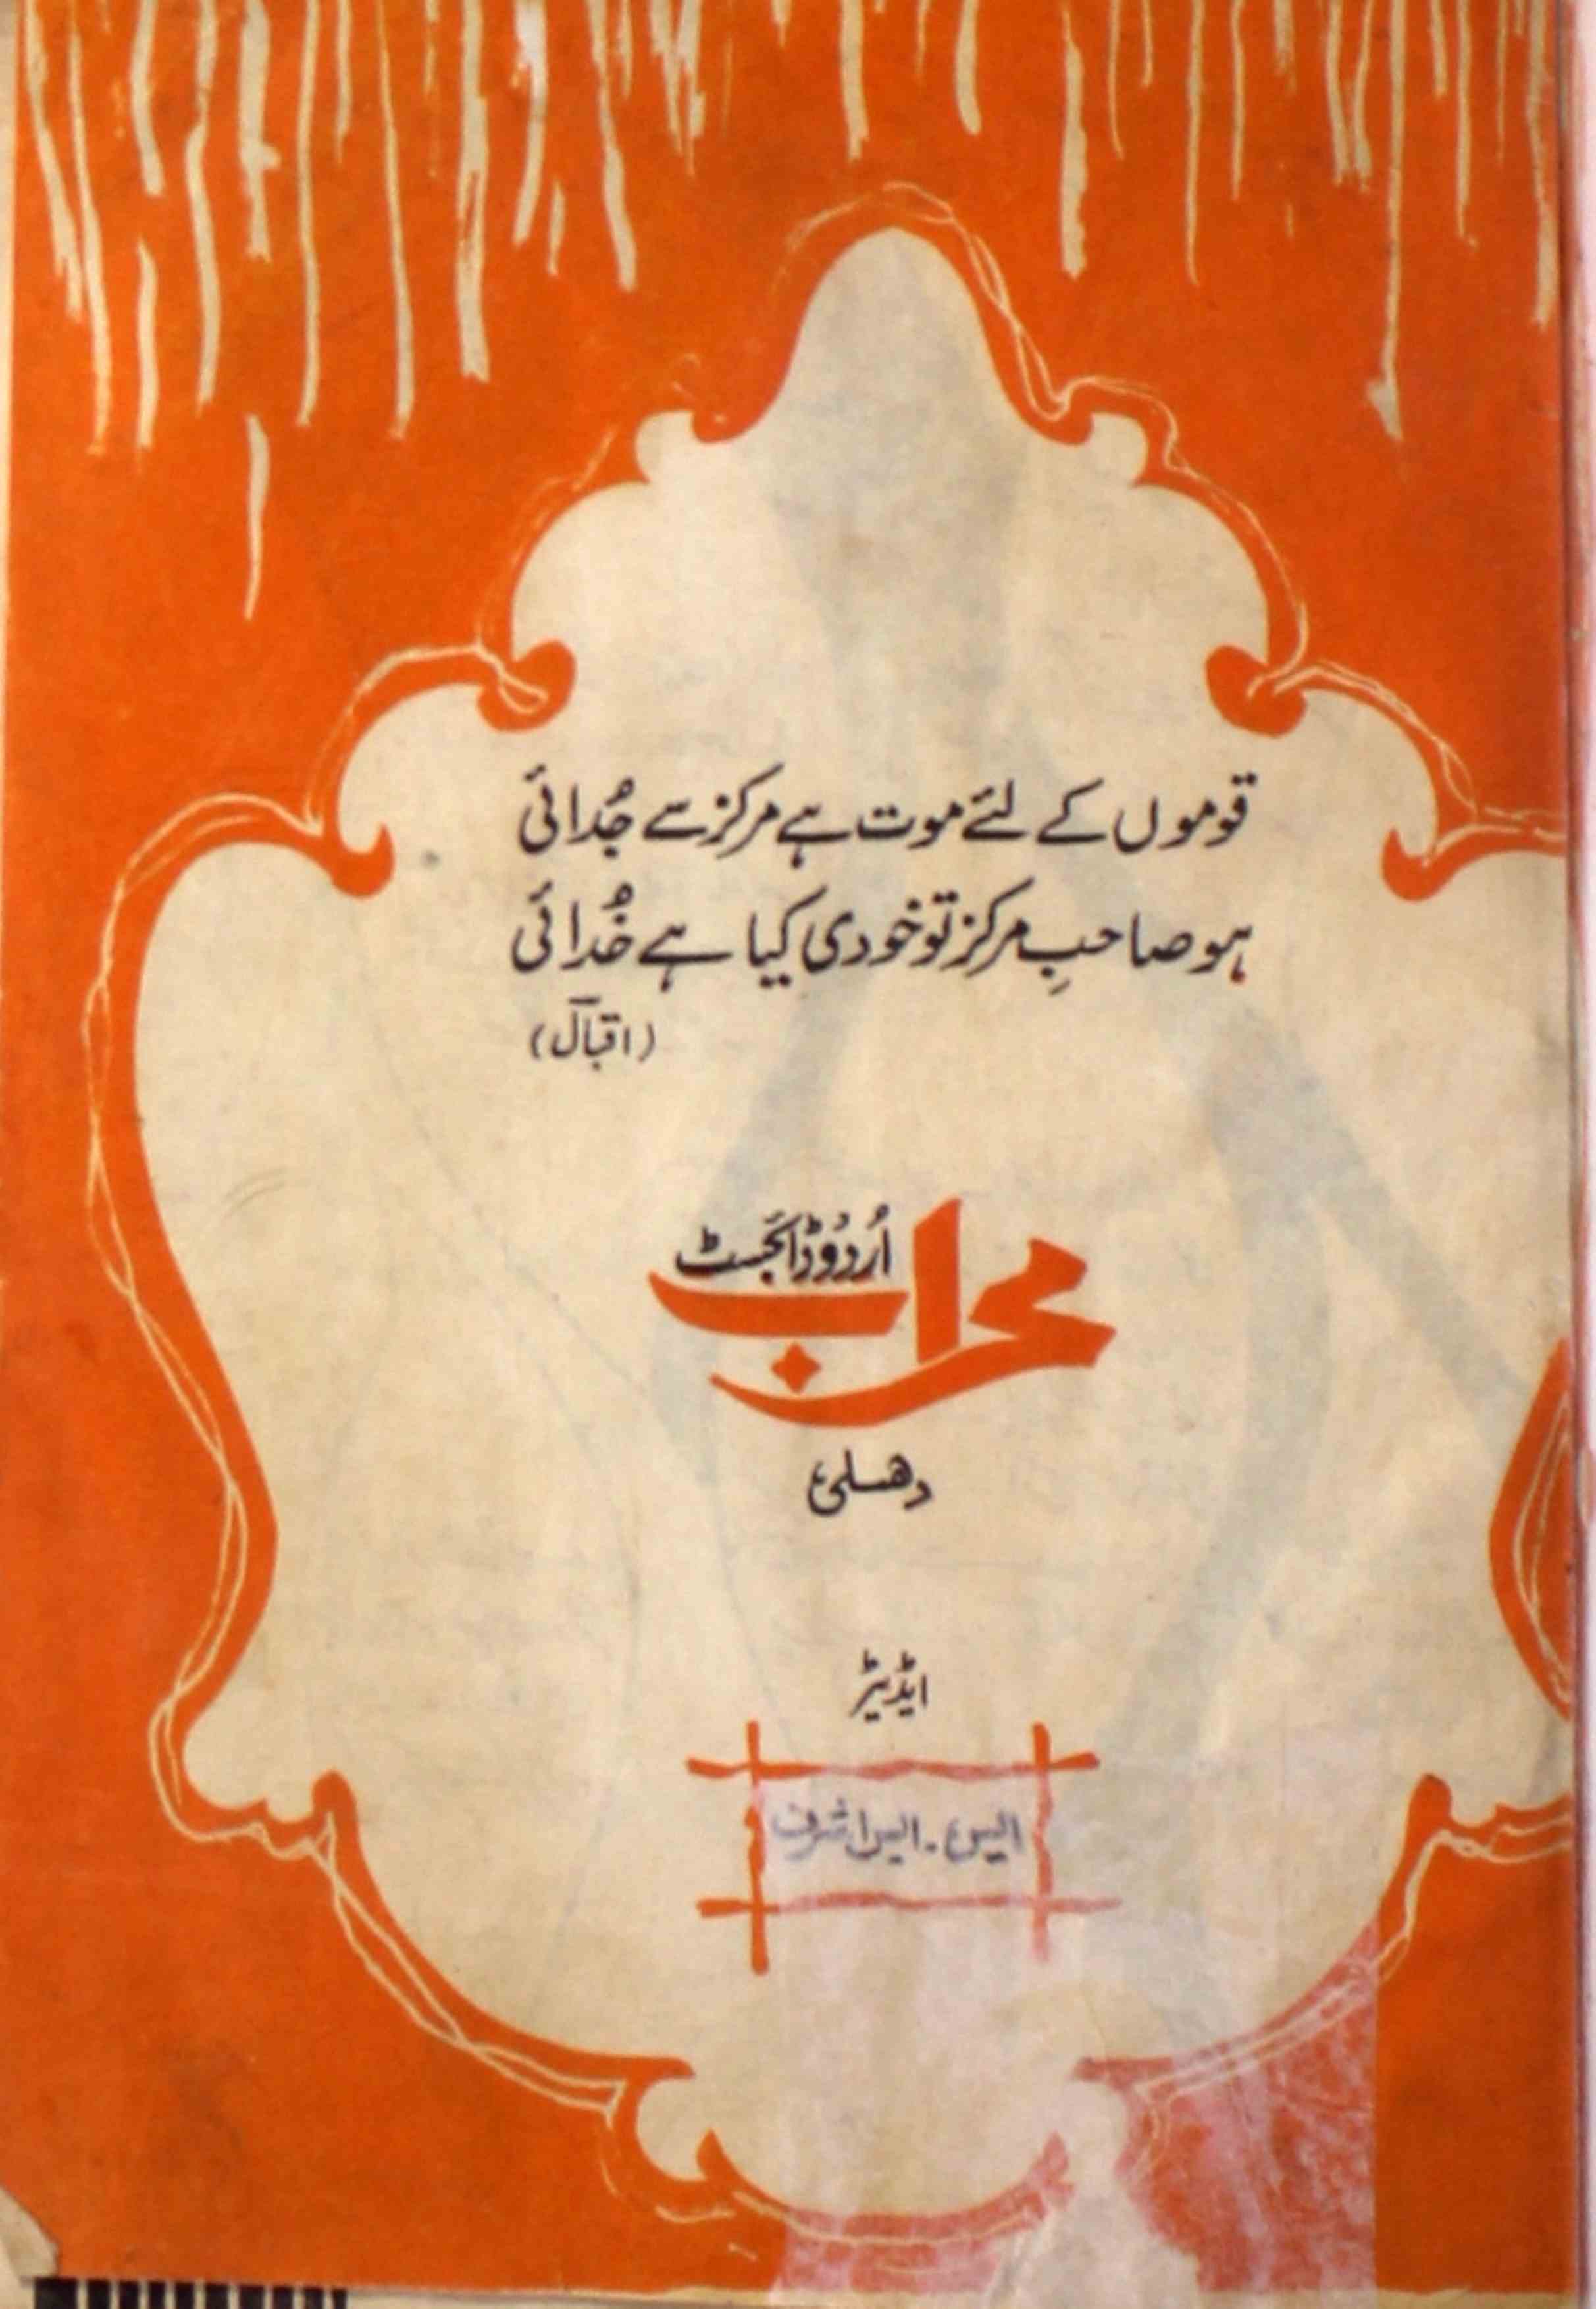 Mahraab Jild 3 Shumara 8 Aug 1973-SVK-Shumara Number-008